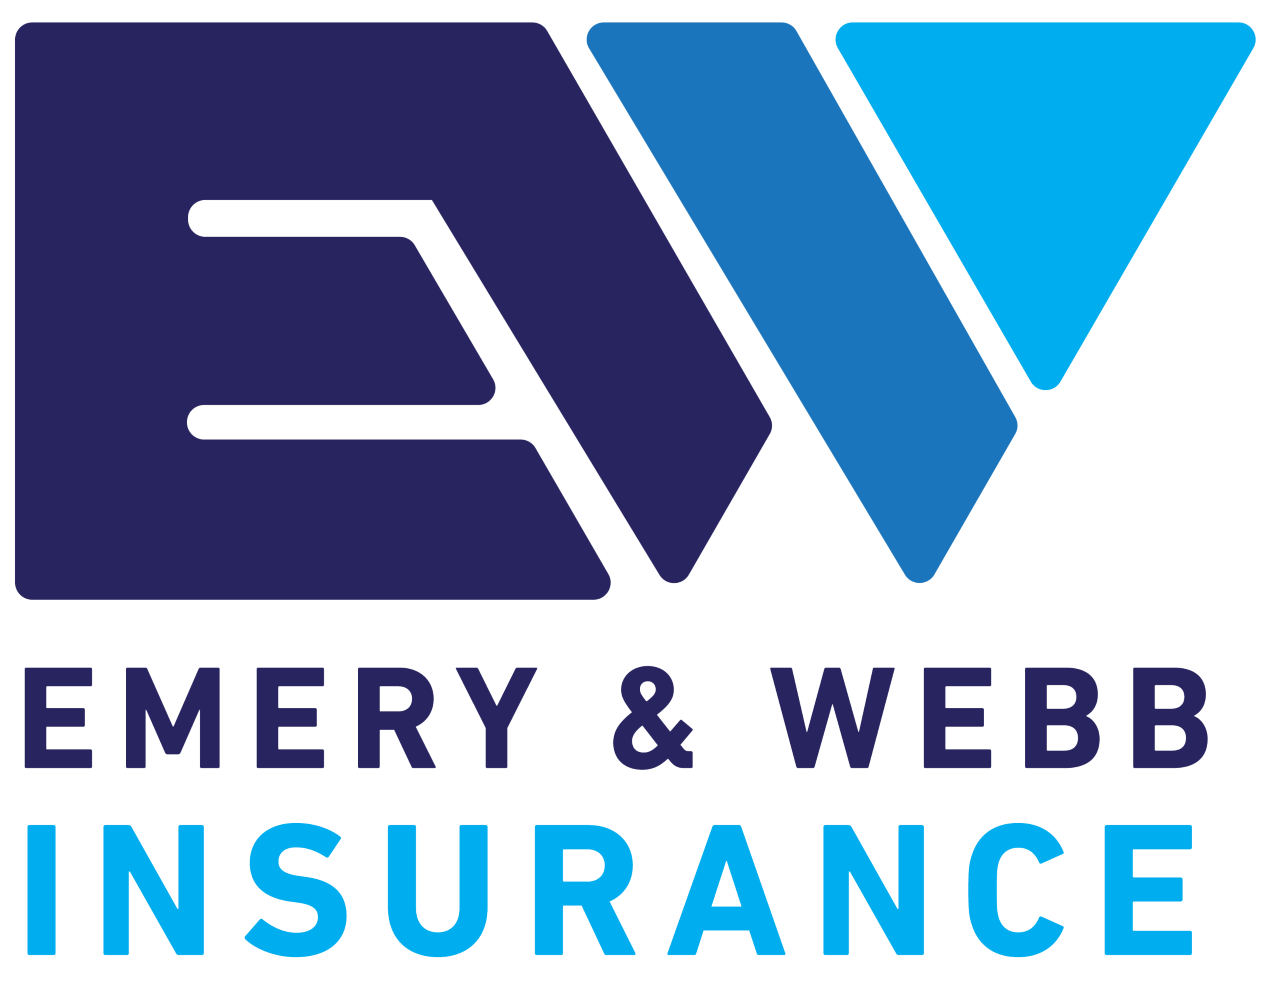 B. Emery and Webb Insurance  (Tier 2)